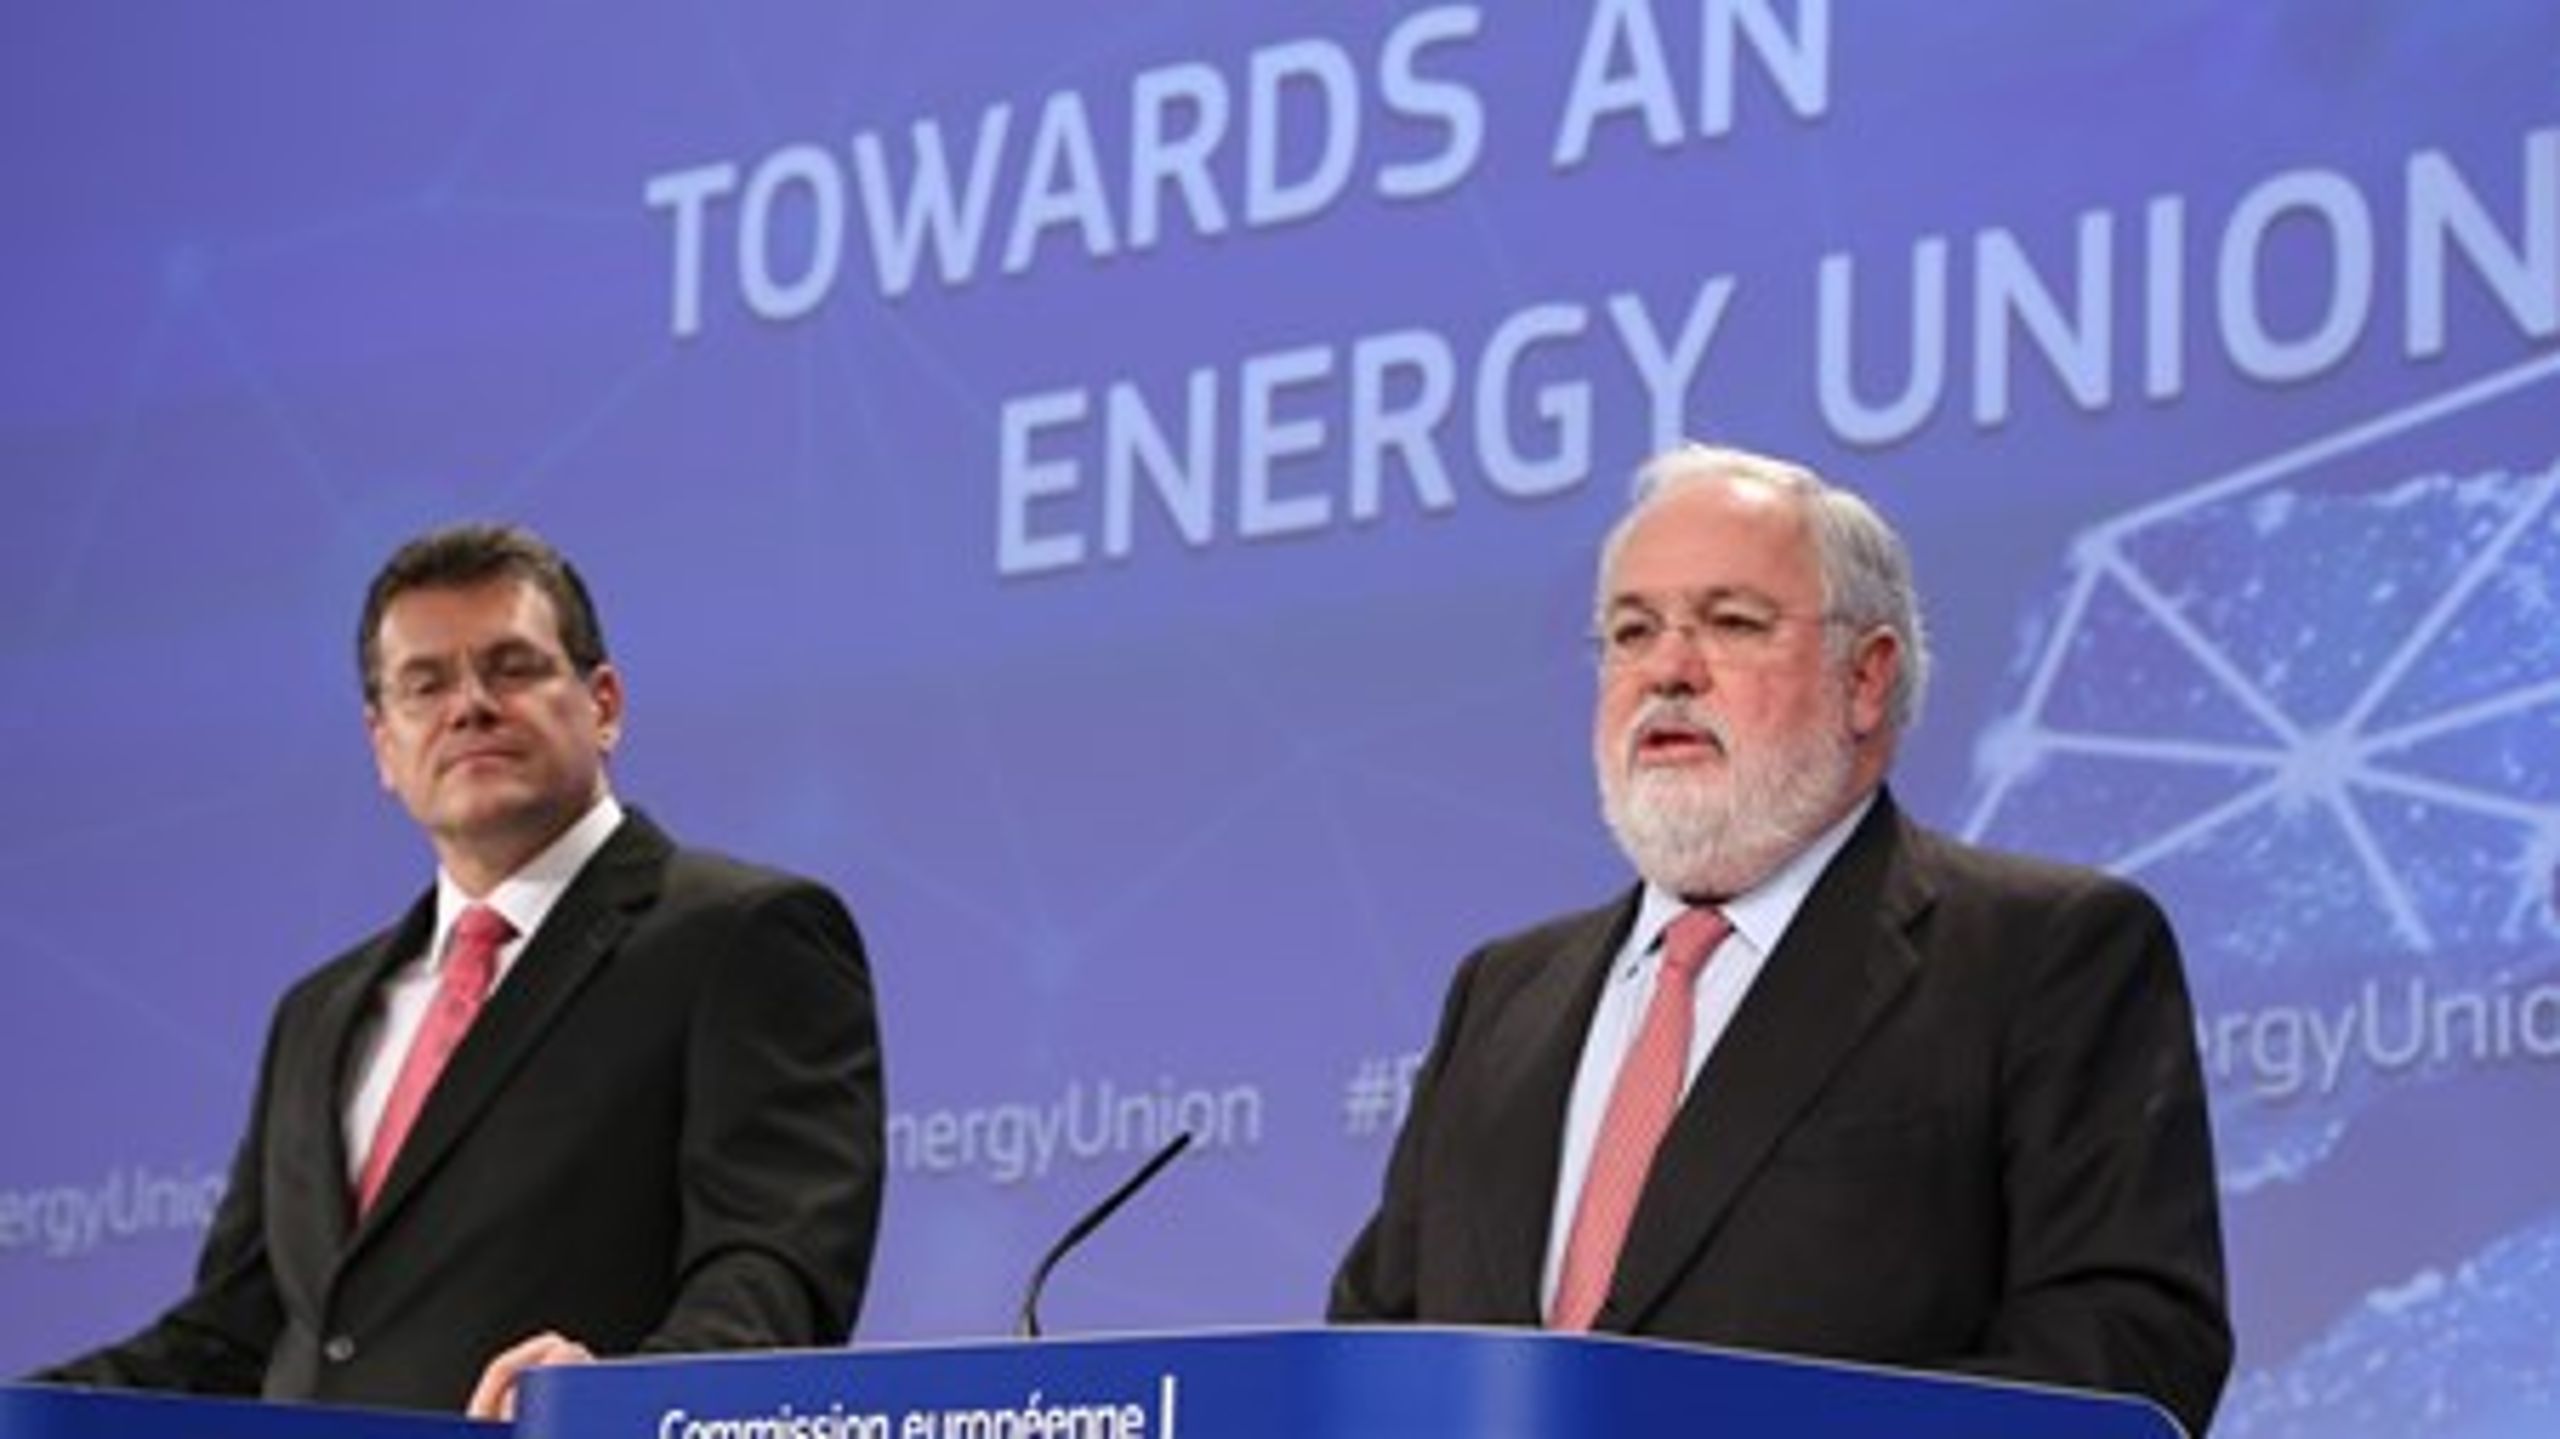 Kommissionens energiunion kræver&nbsp;et indre marked for energi, skriver Bjarke Møller og Hans Martens, henholdsvis direktør og seniorrådgiver i Tænketanken Europa.&nbsp;